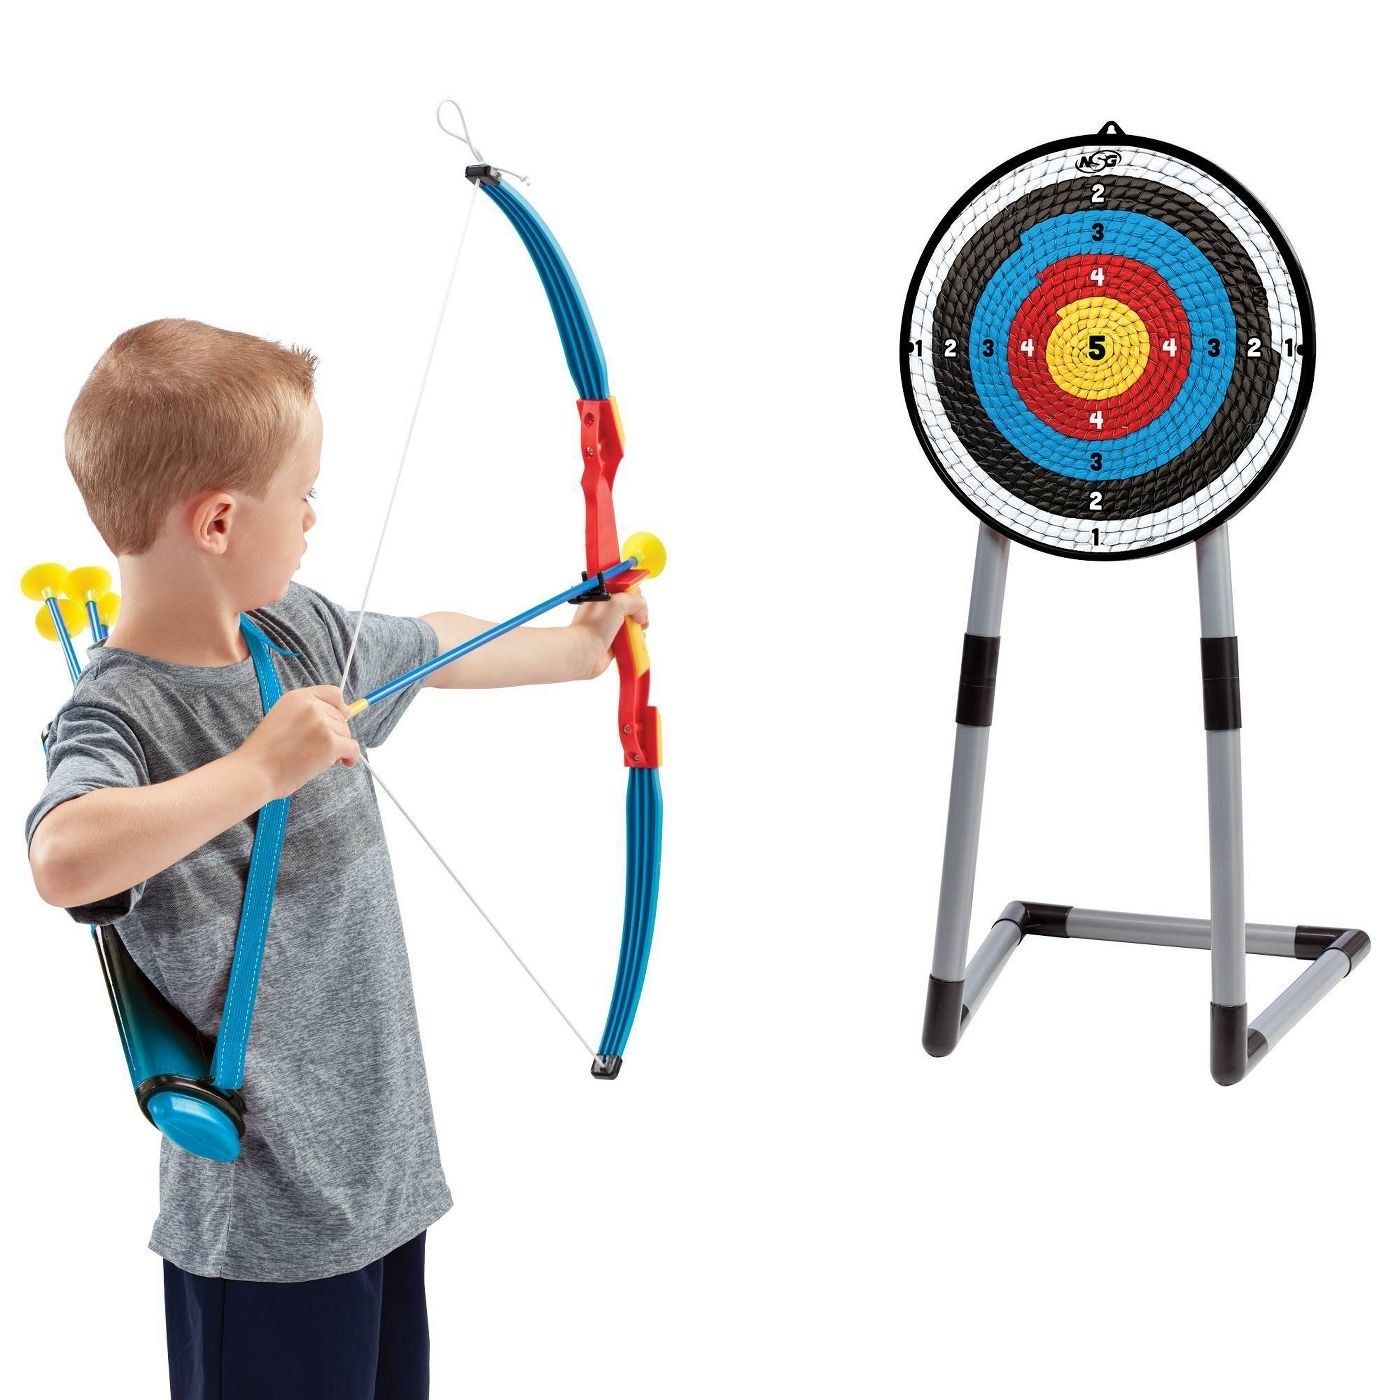 Kid using archery set